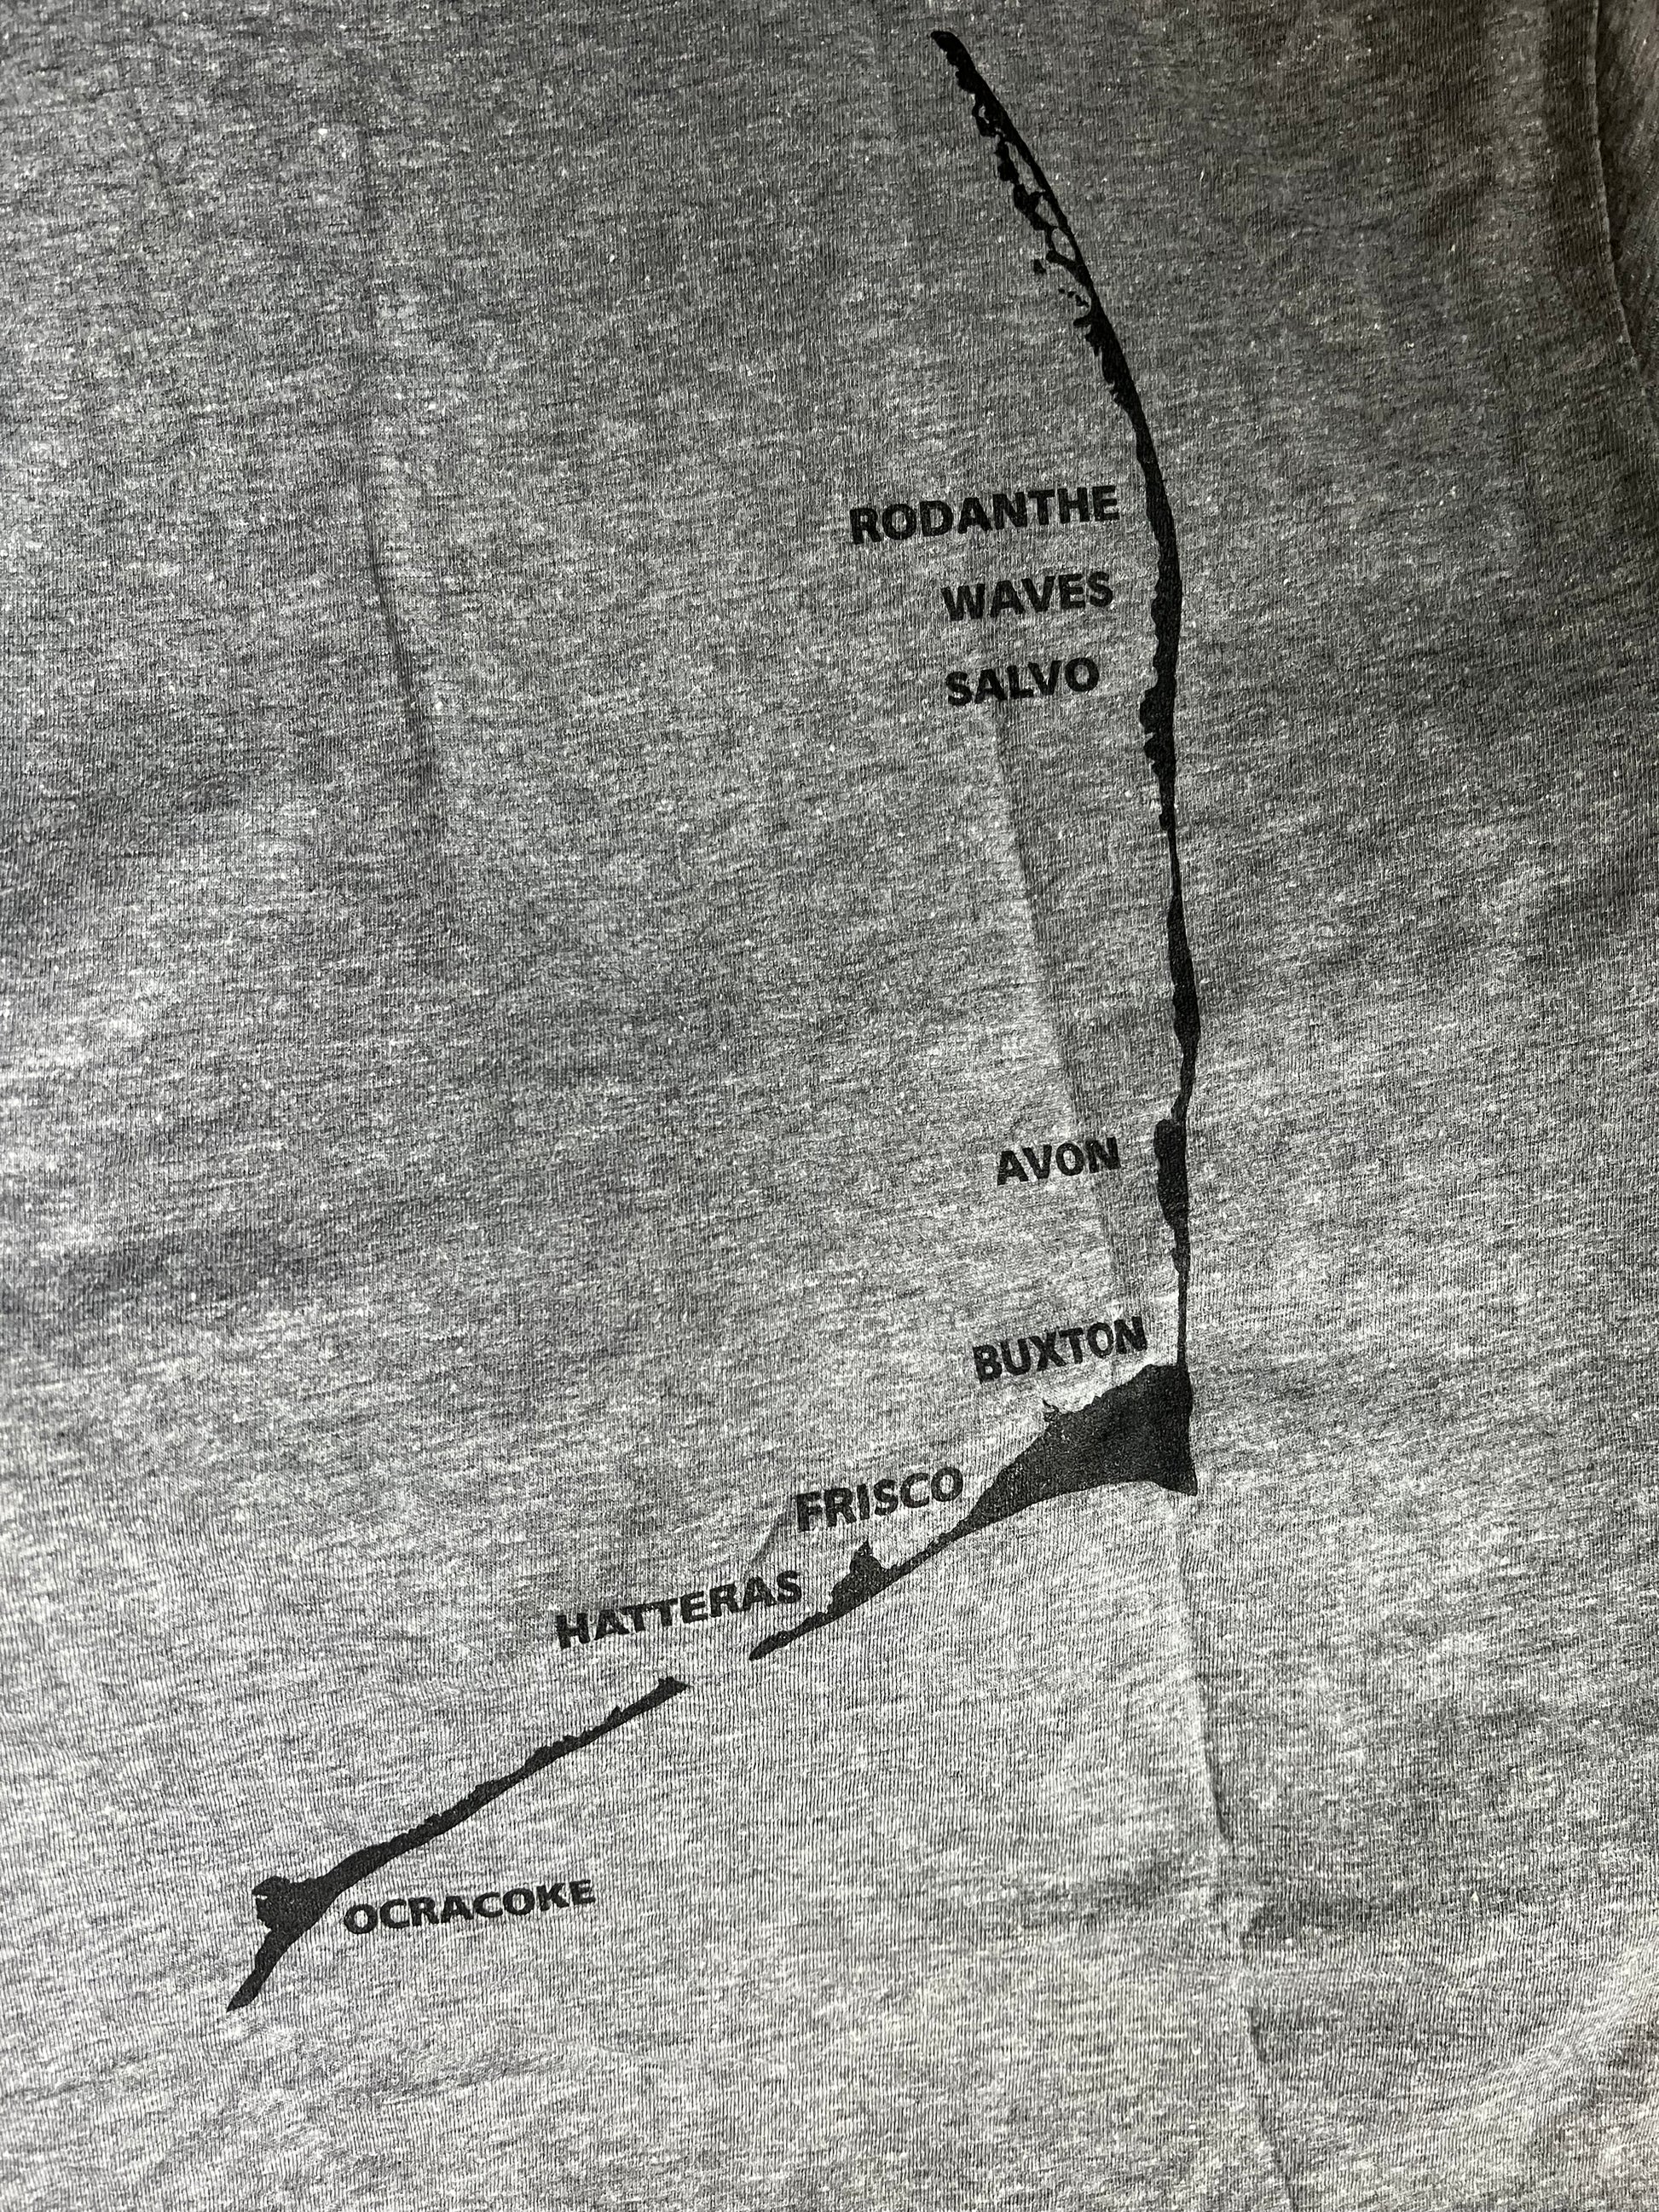 Hatteras Island short sleeve - Highway 12 Shirts